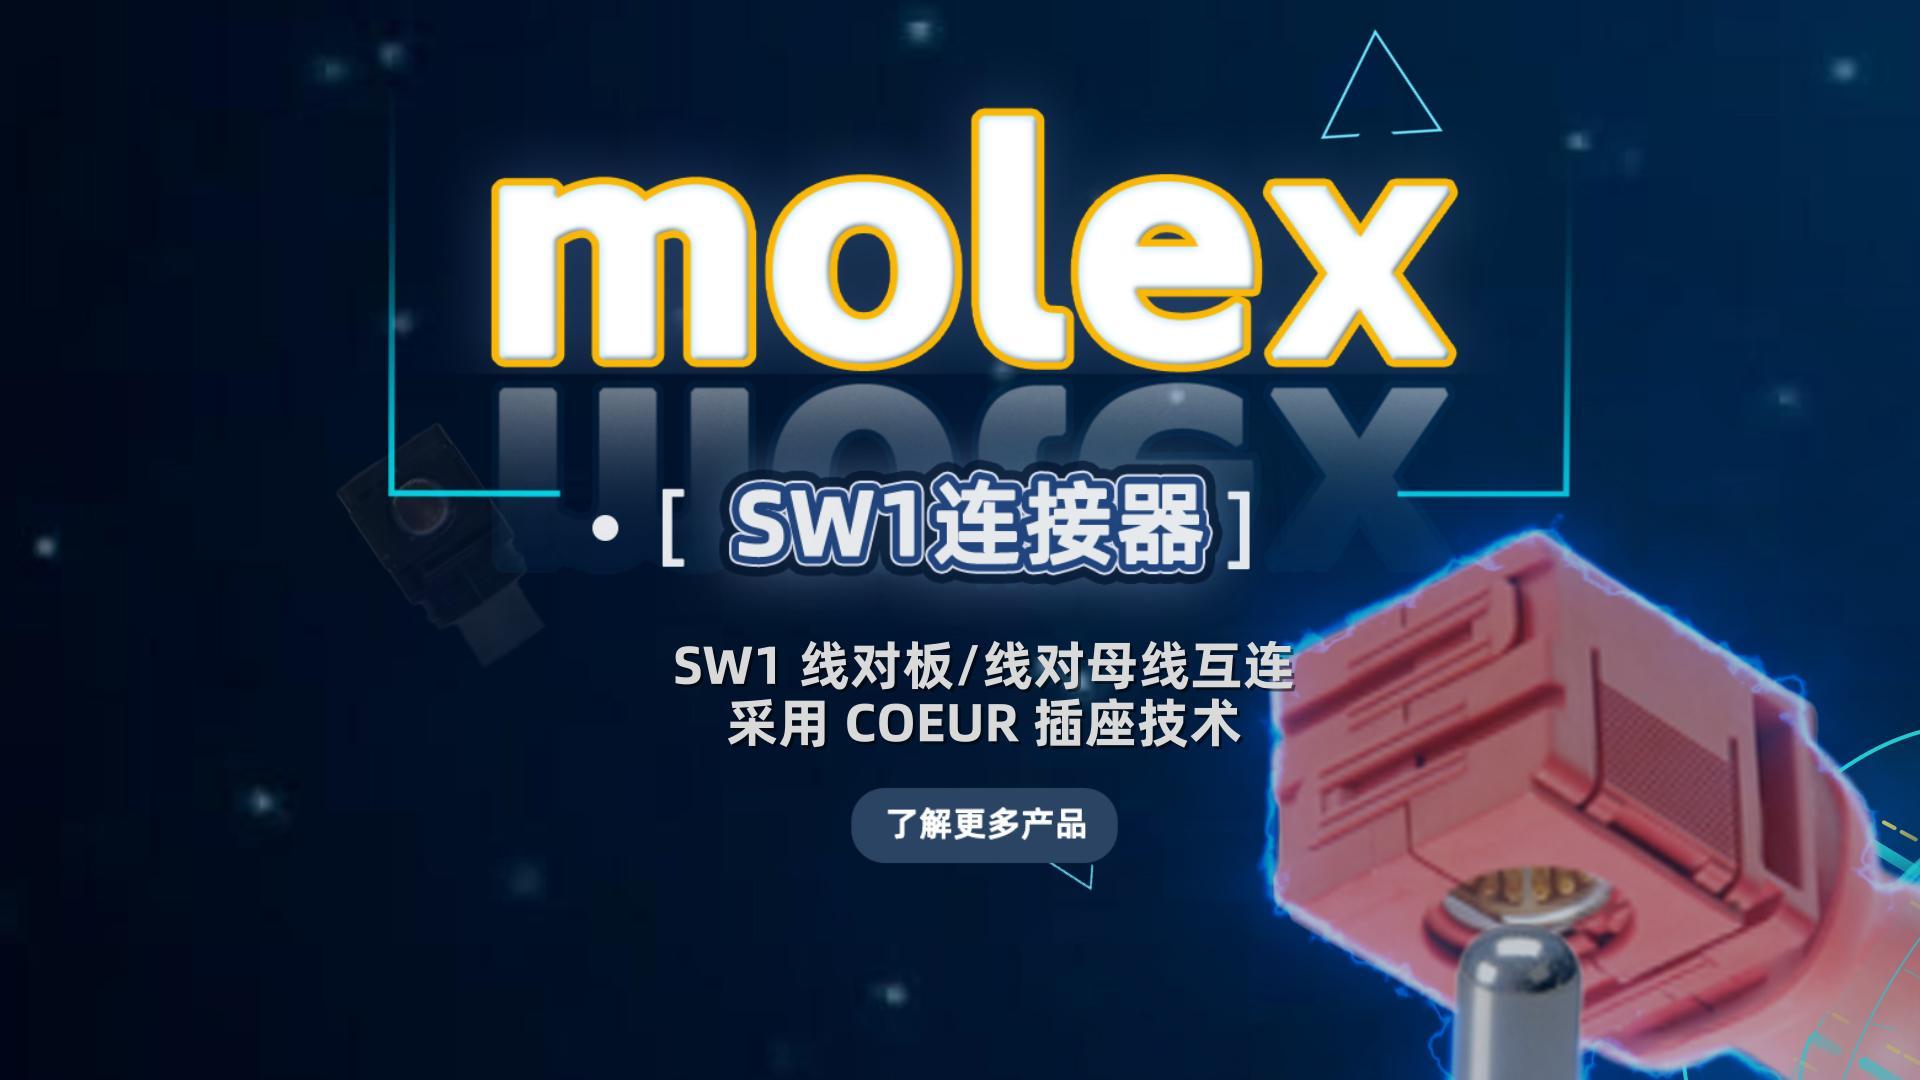 Molex SW1连接器采用COEUR插座技术